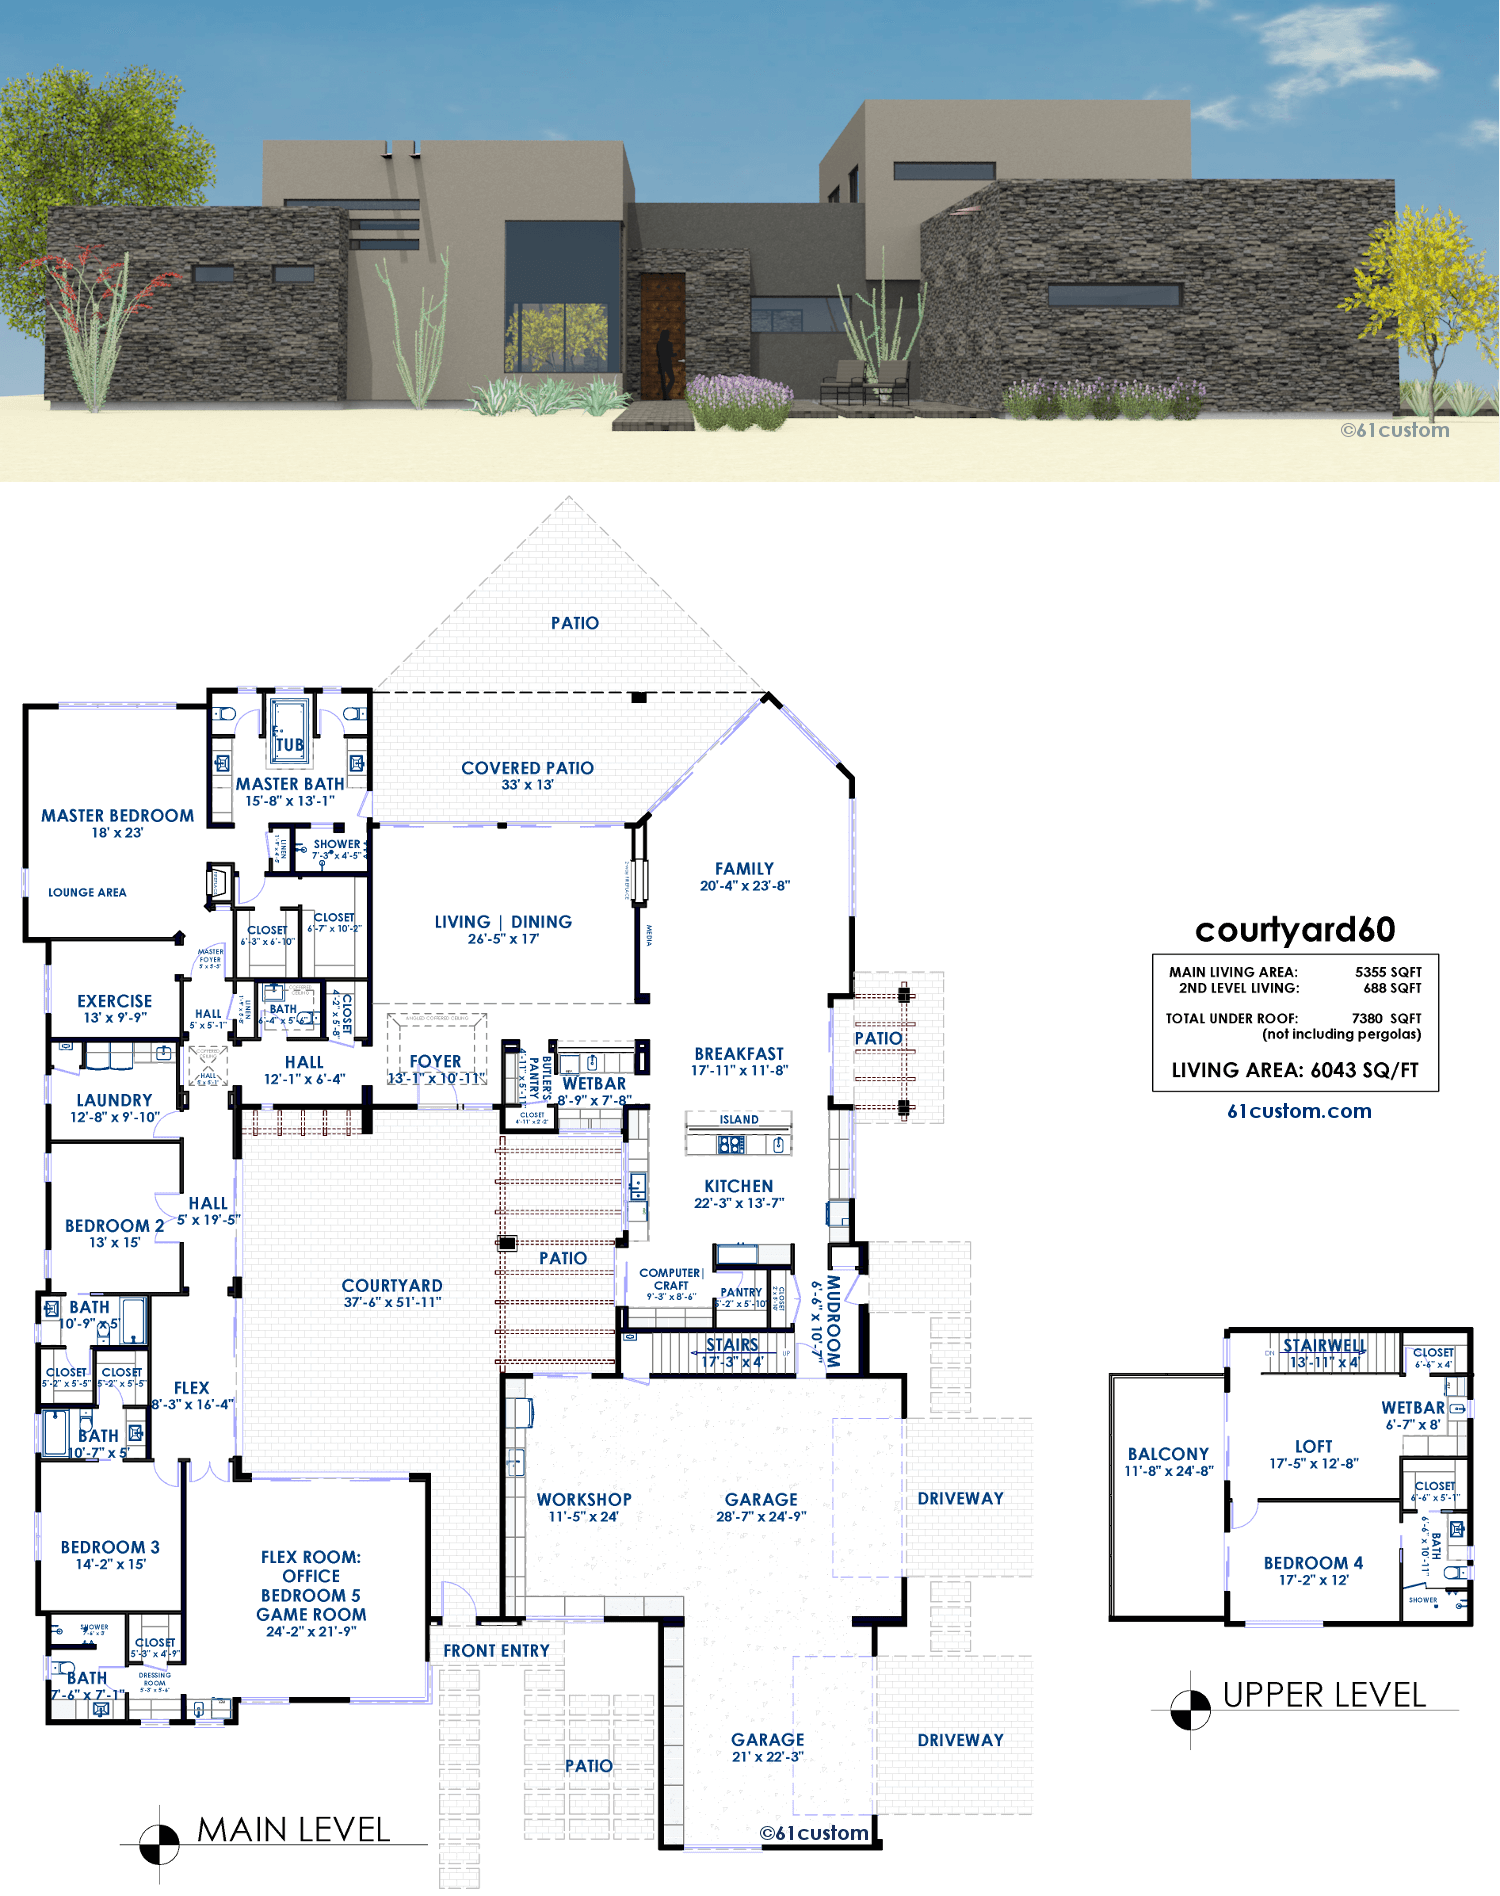 courtyard60 Luxury Modern House  Plan  61custom 